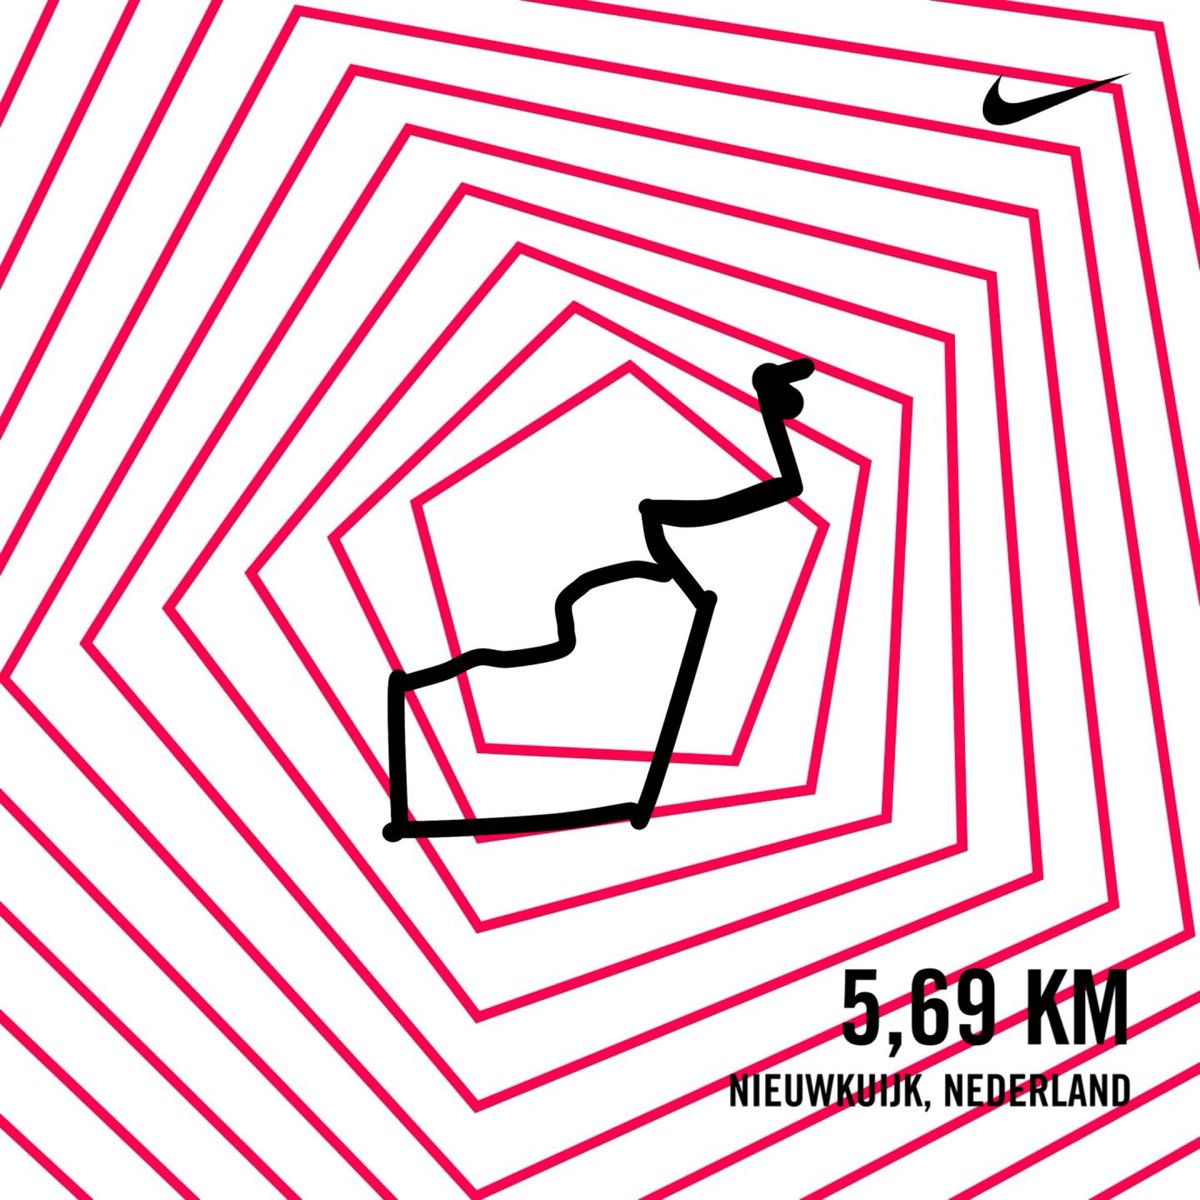 Just completed a 5,69 km run! #Adidas #IWatch #NikeRunClub #Nieuwkuijk 🇳🇱